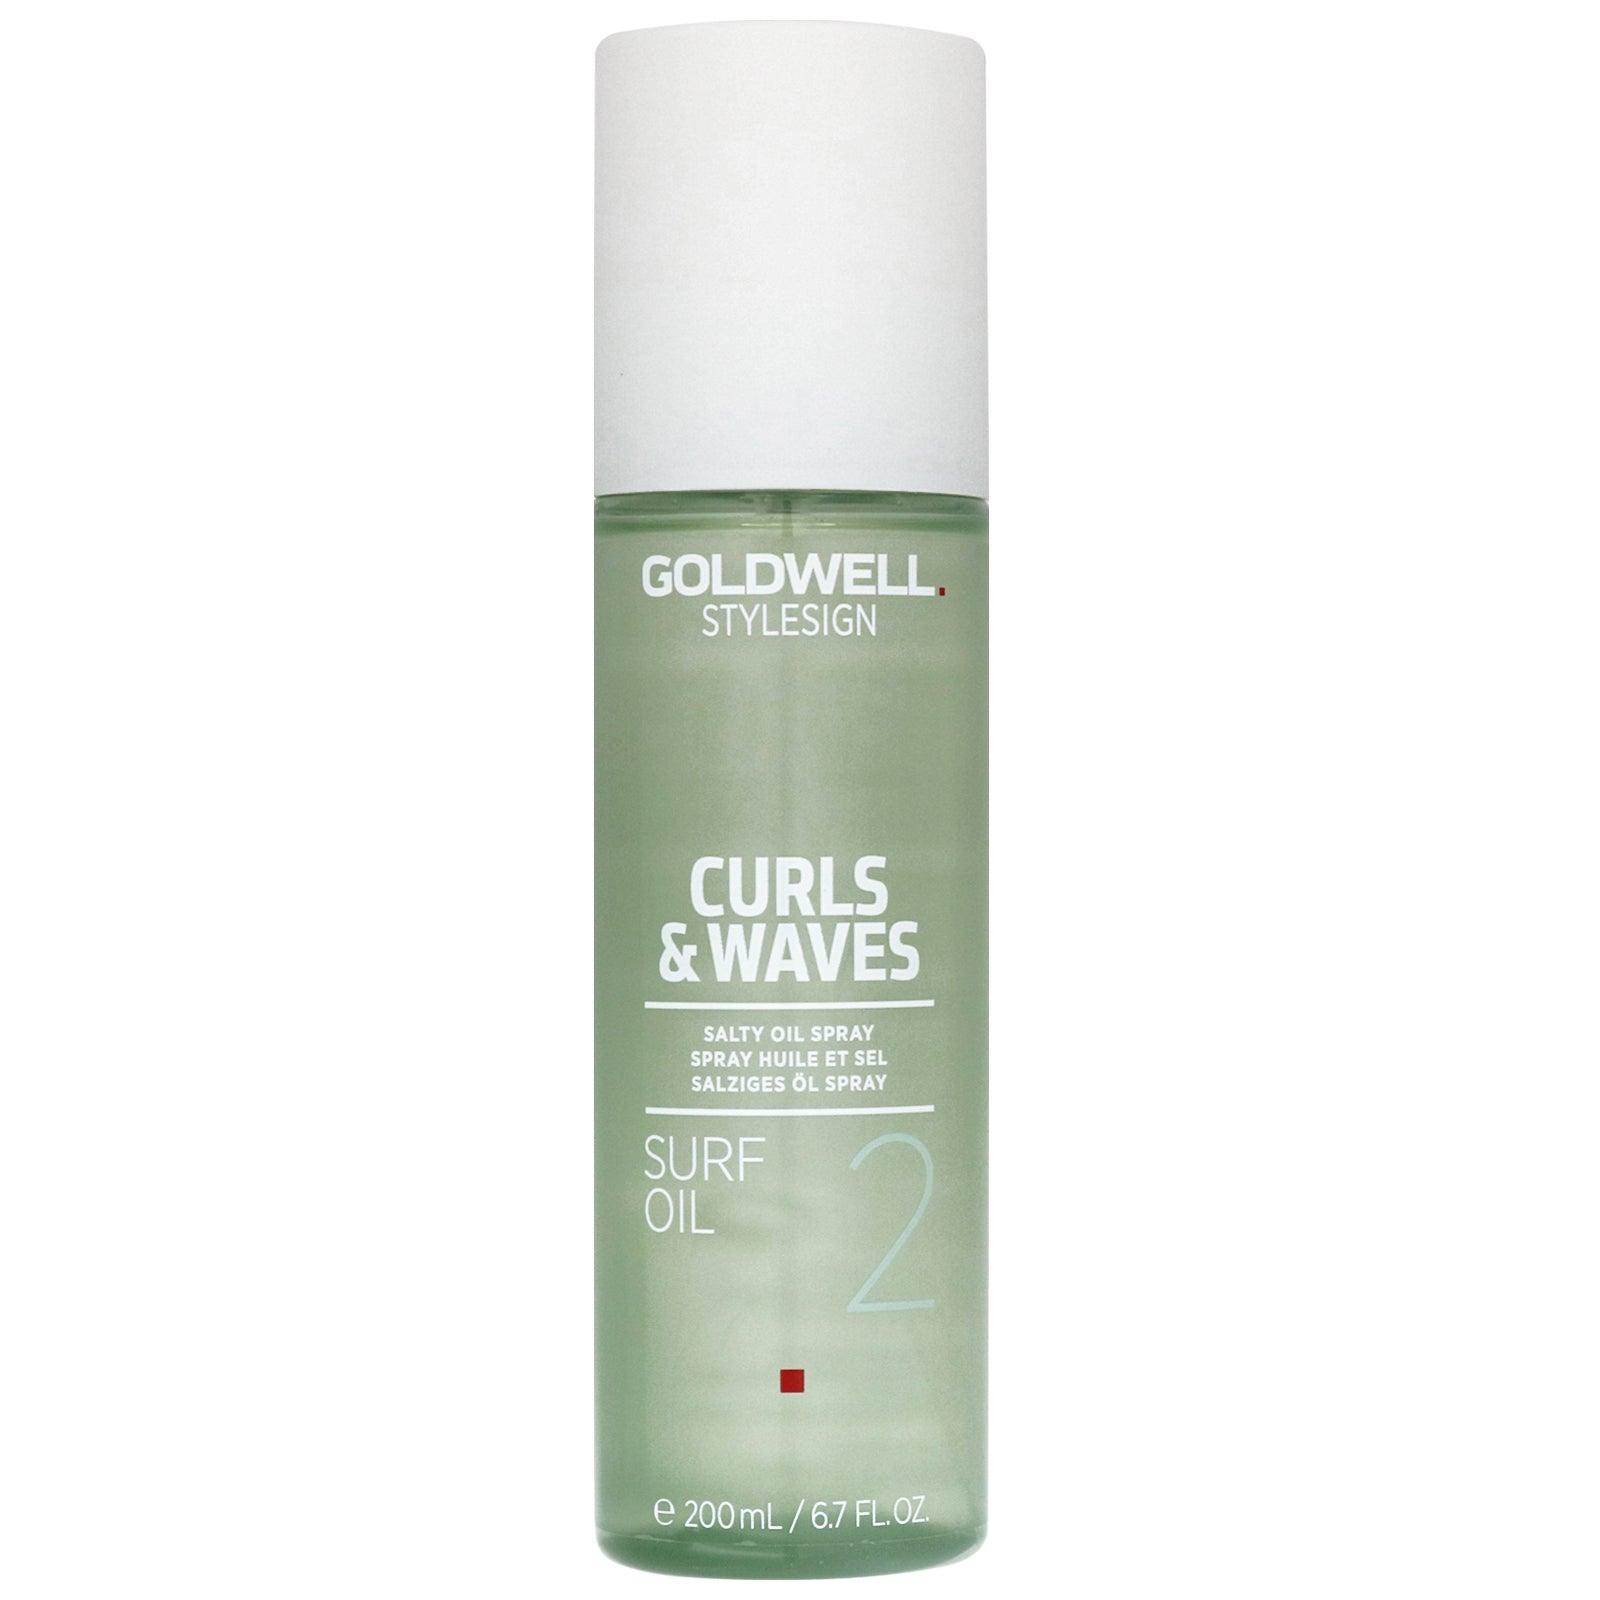 Goldwell Stylesign Curls & Waves Surf Oil 2 200ml - Goldwell